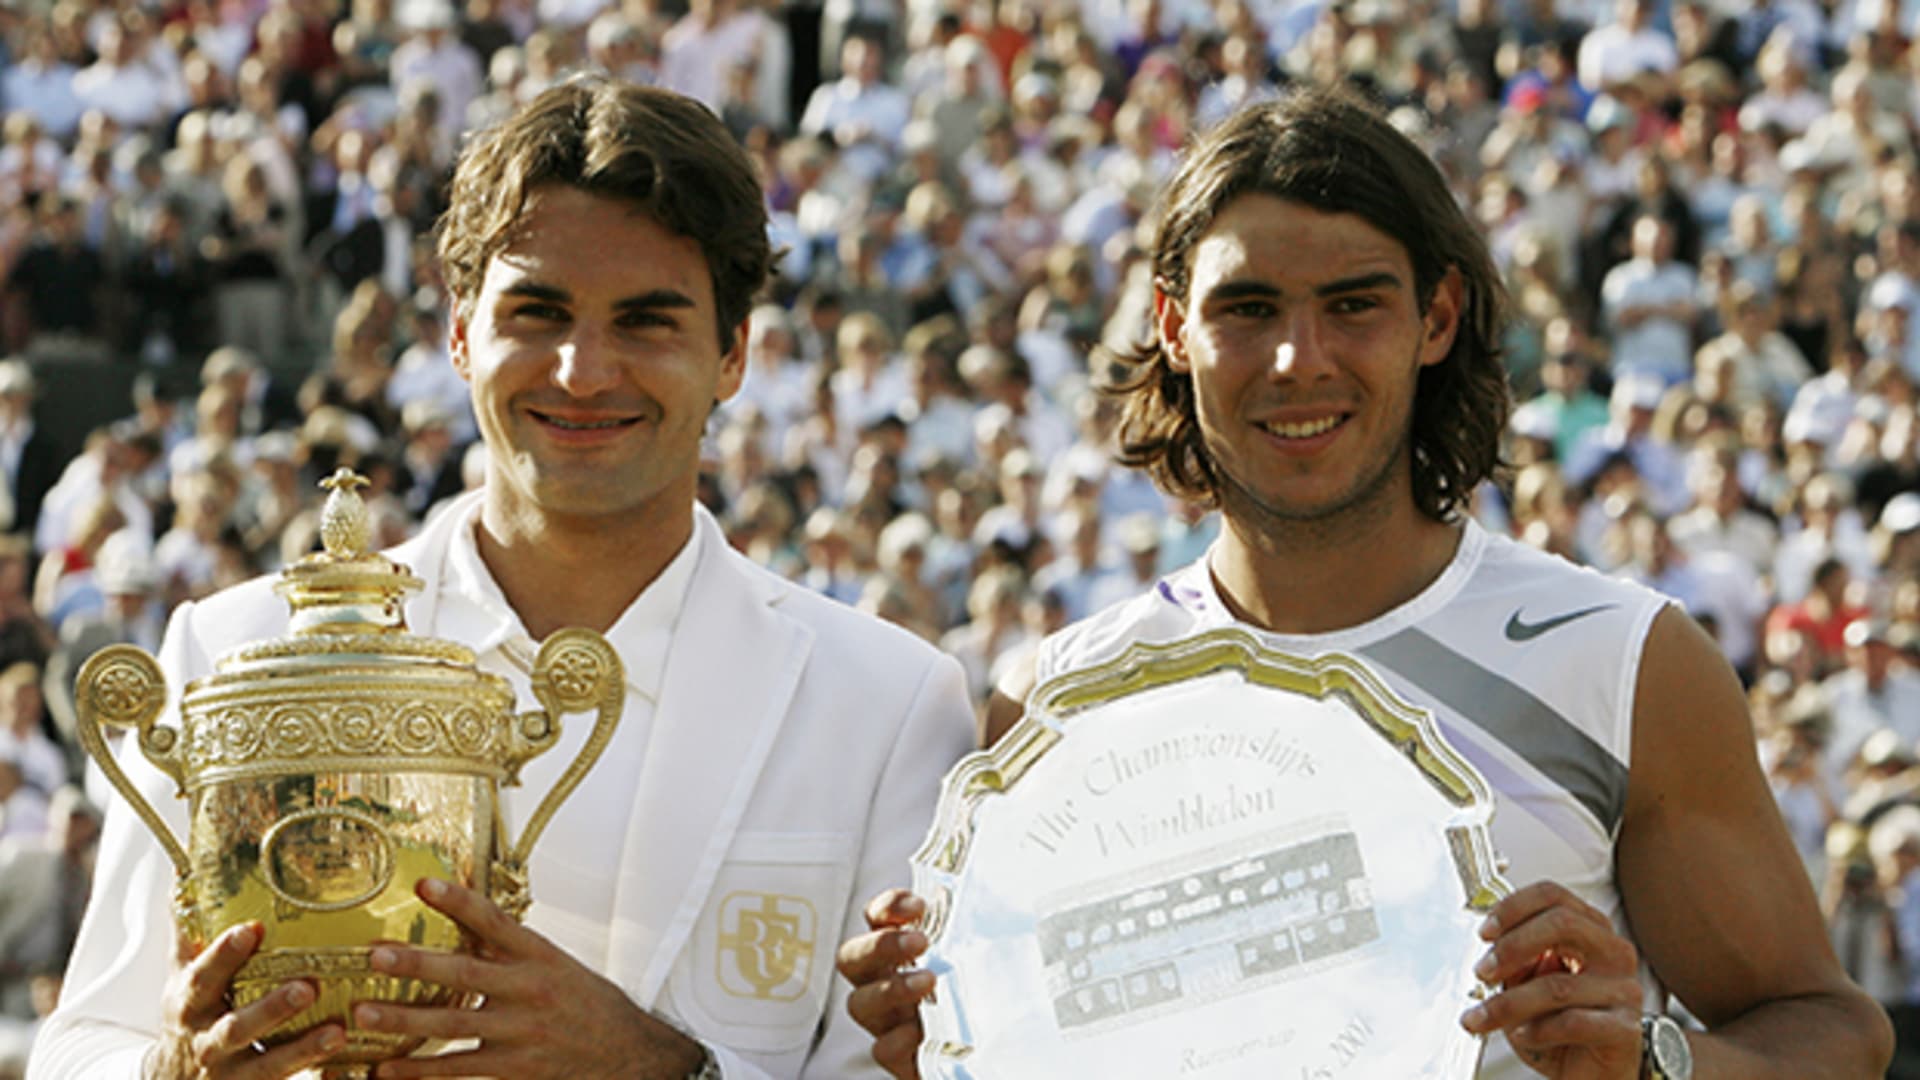 20 for 20: Federer d. Nadal, 2007 Wimbledon